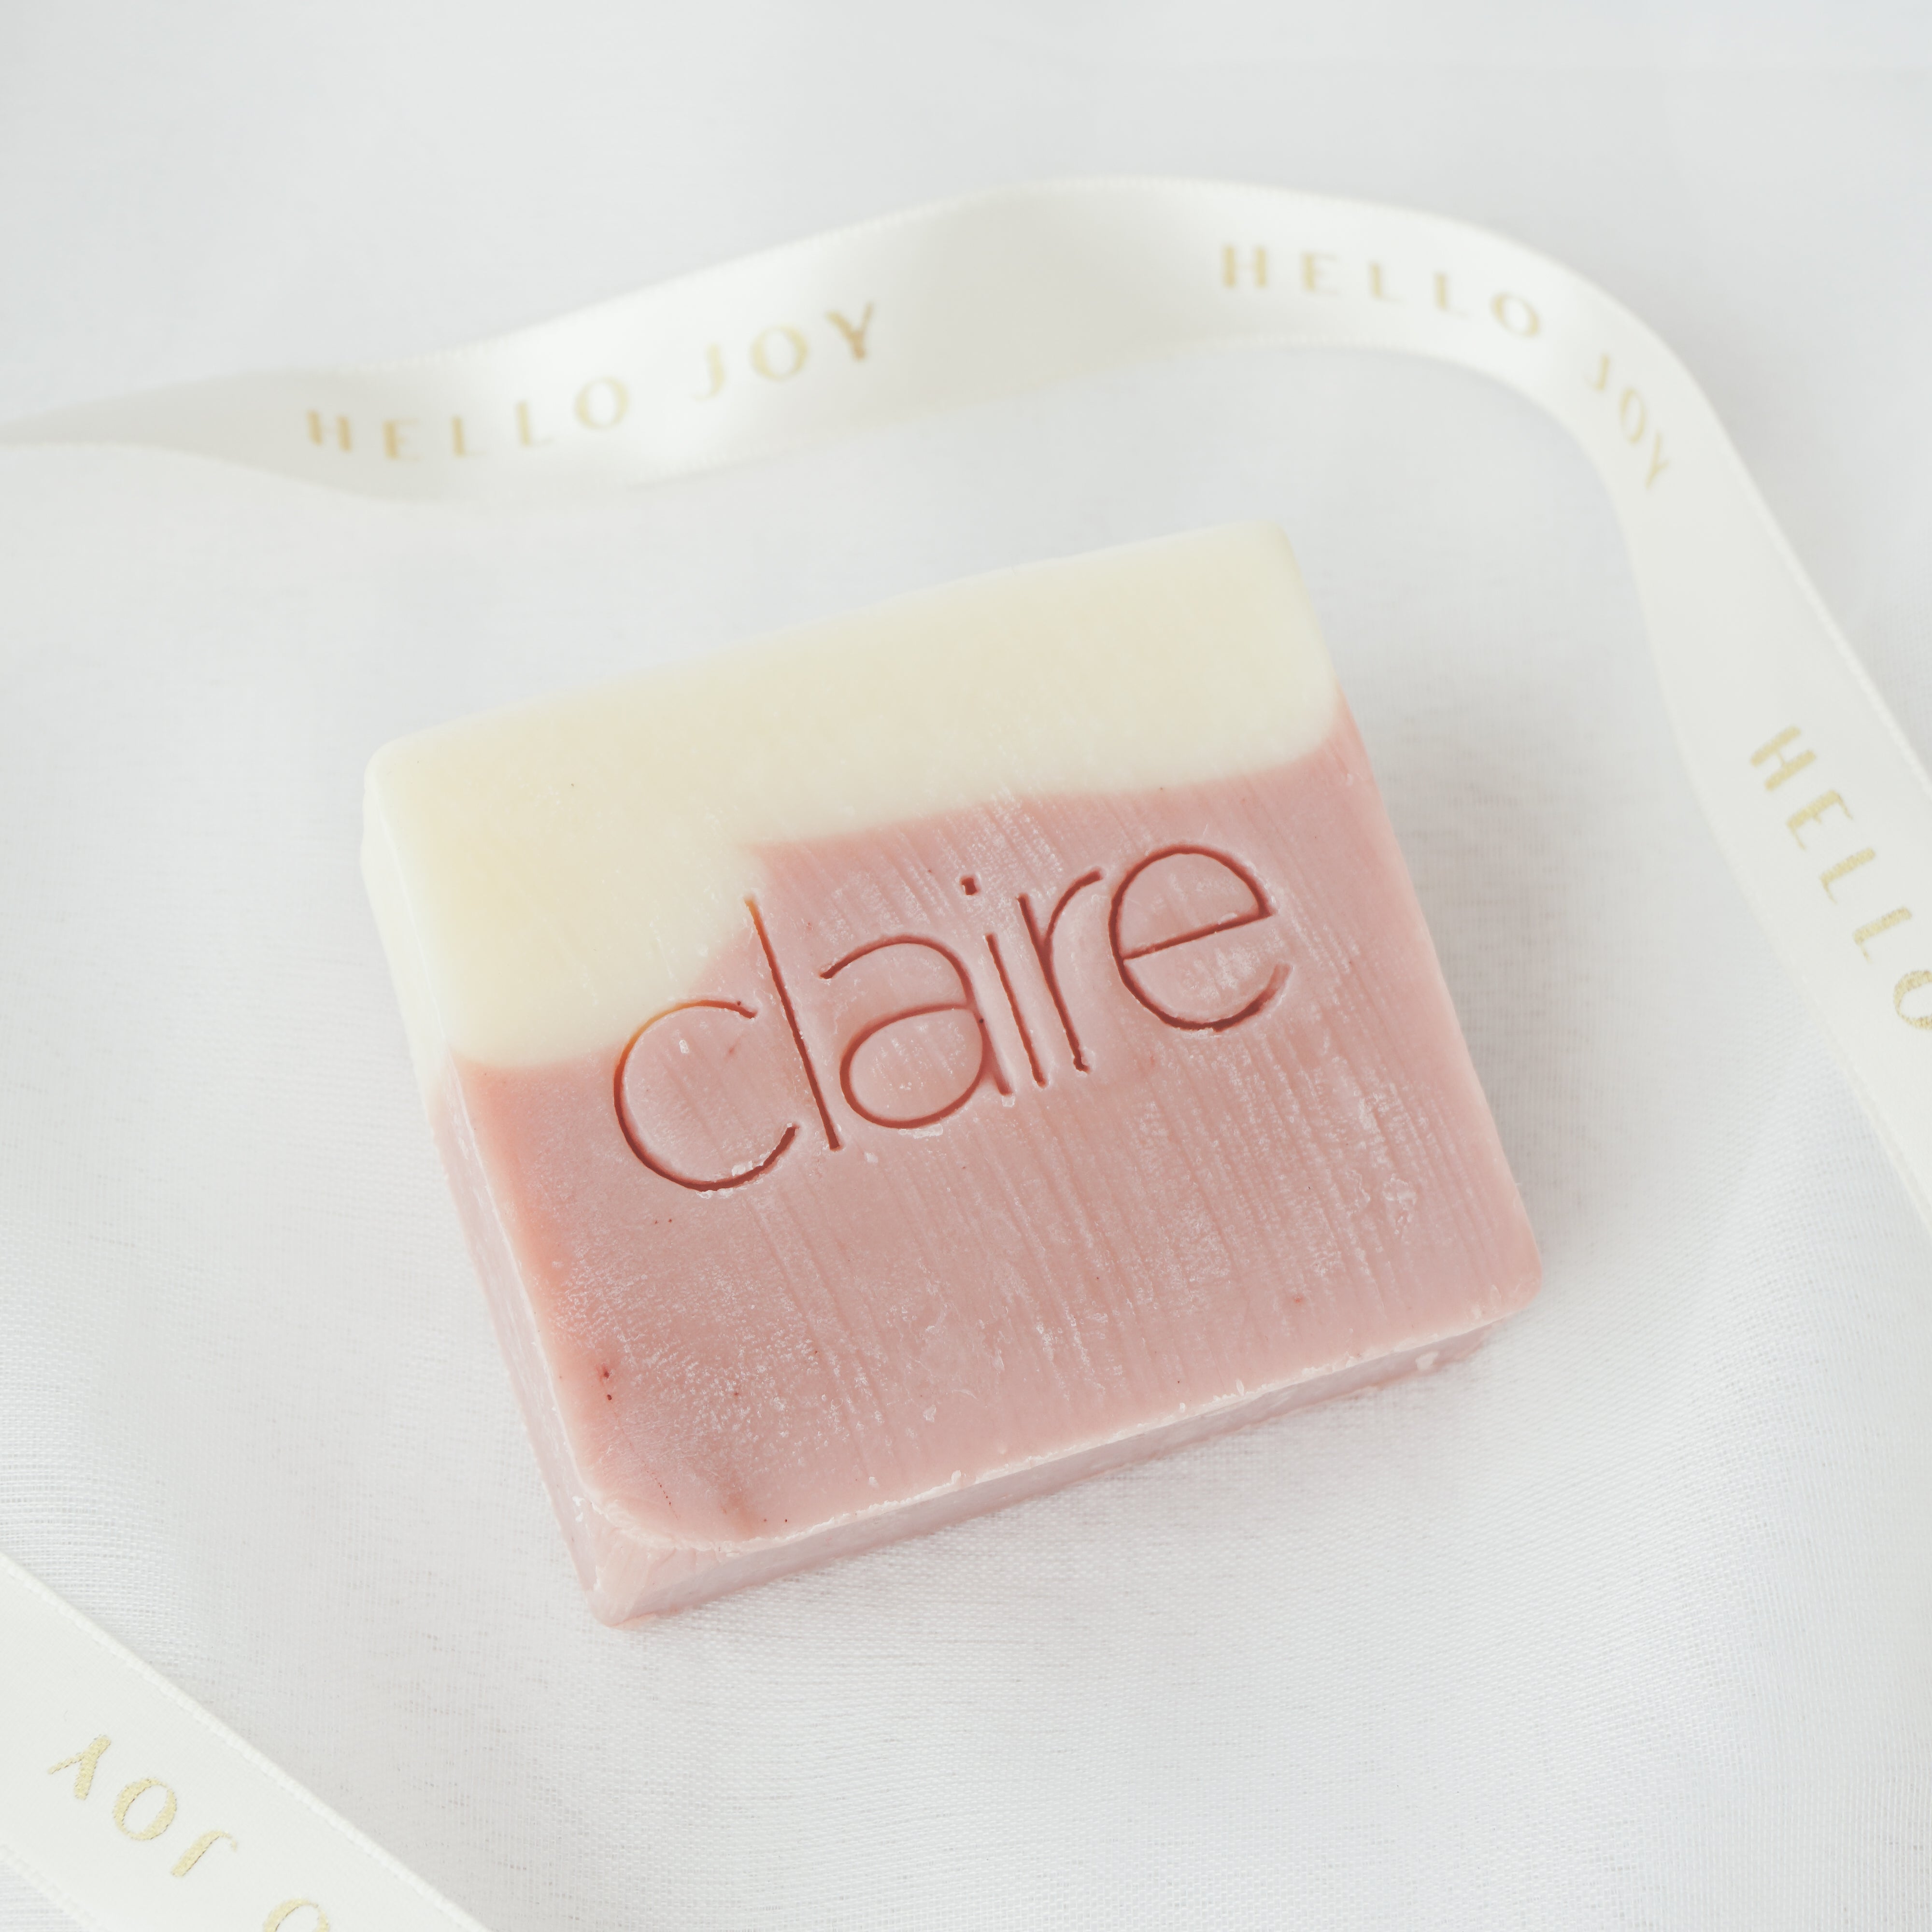 Claire Organics - Lavender Calming Soap